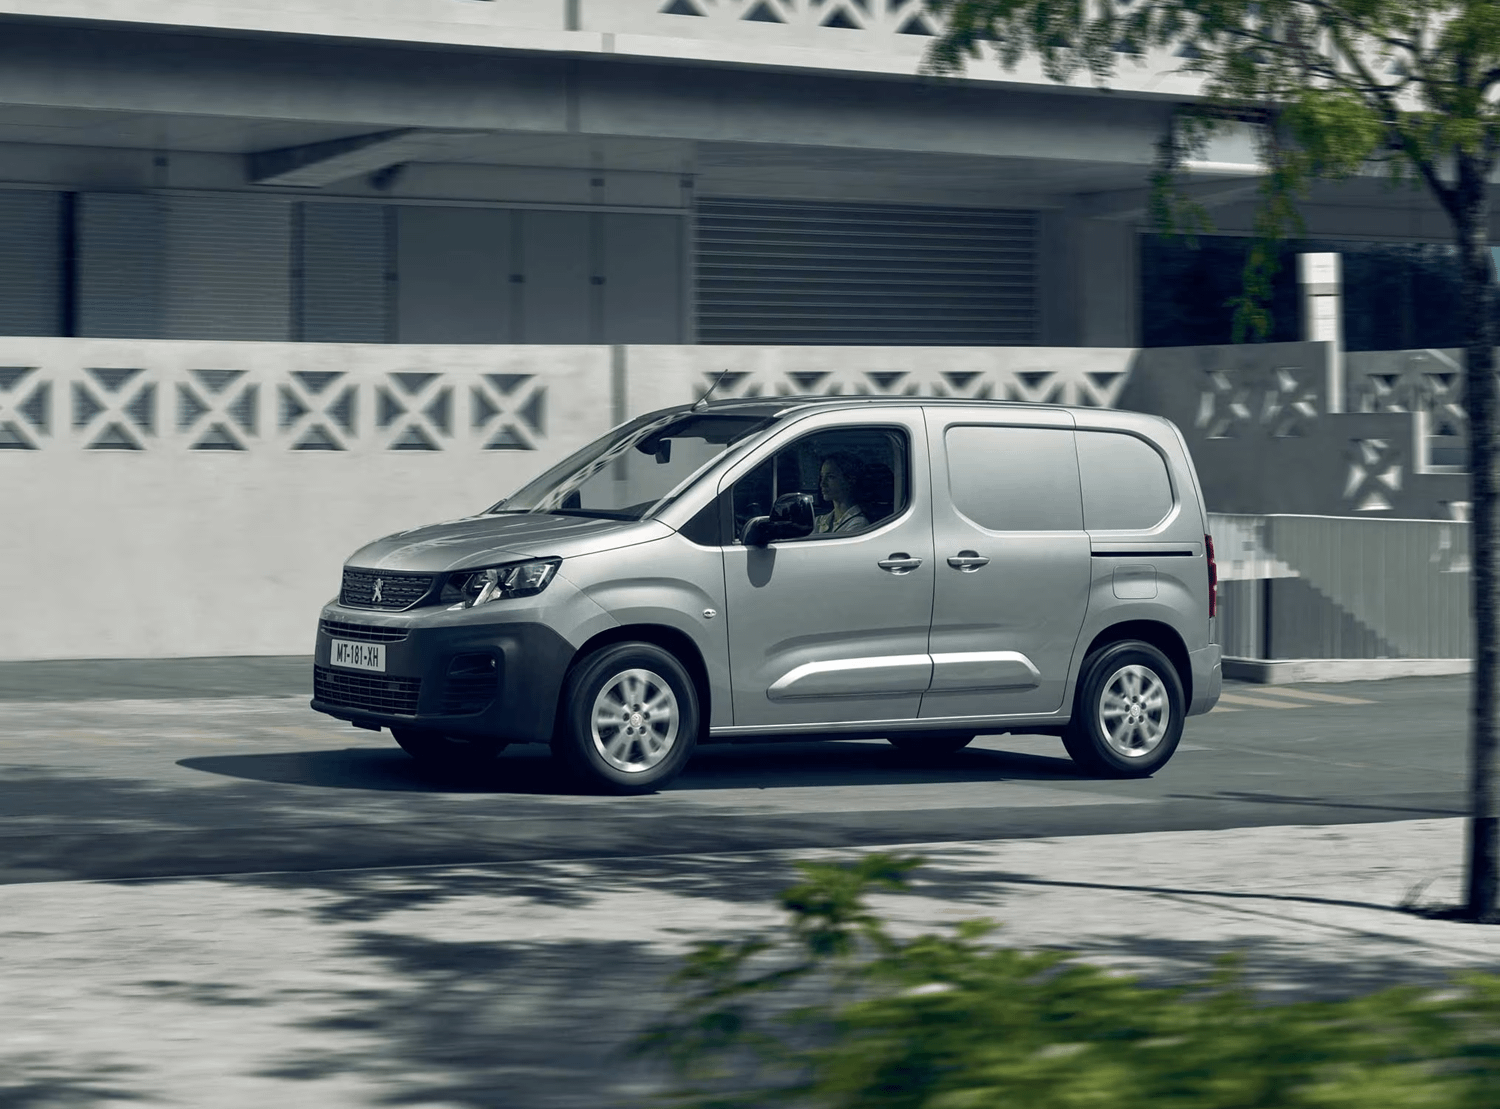 Peugeot Partner Van, South Wales